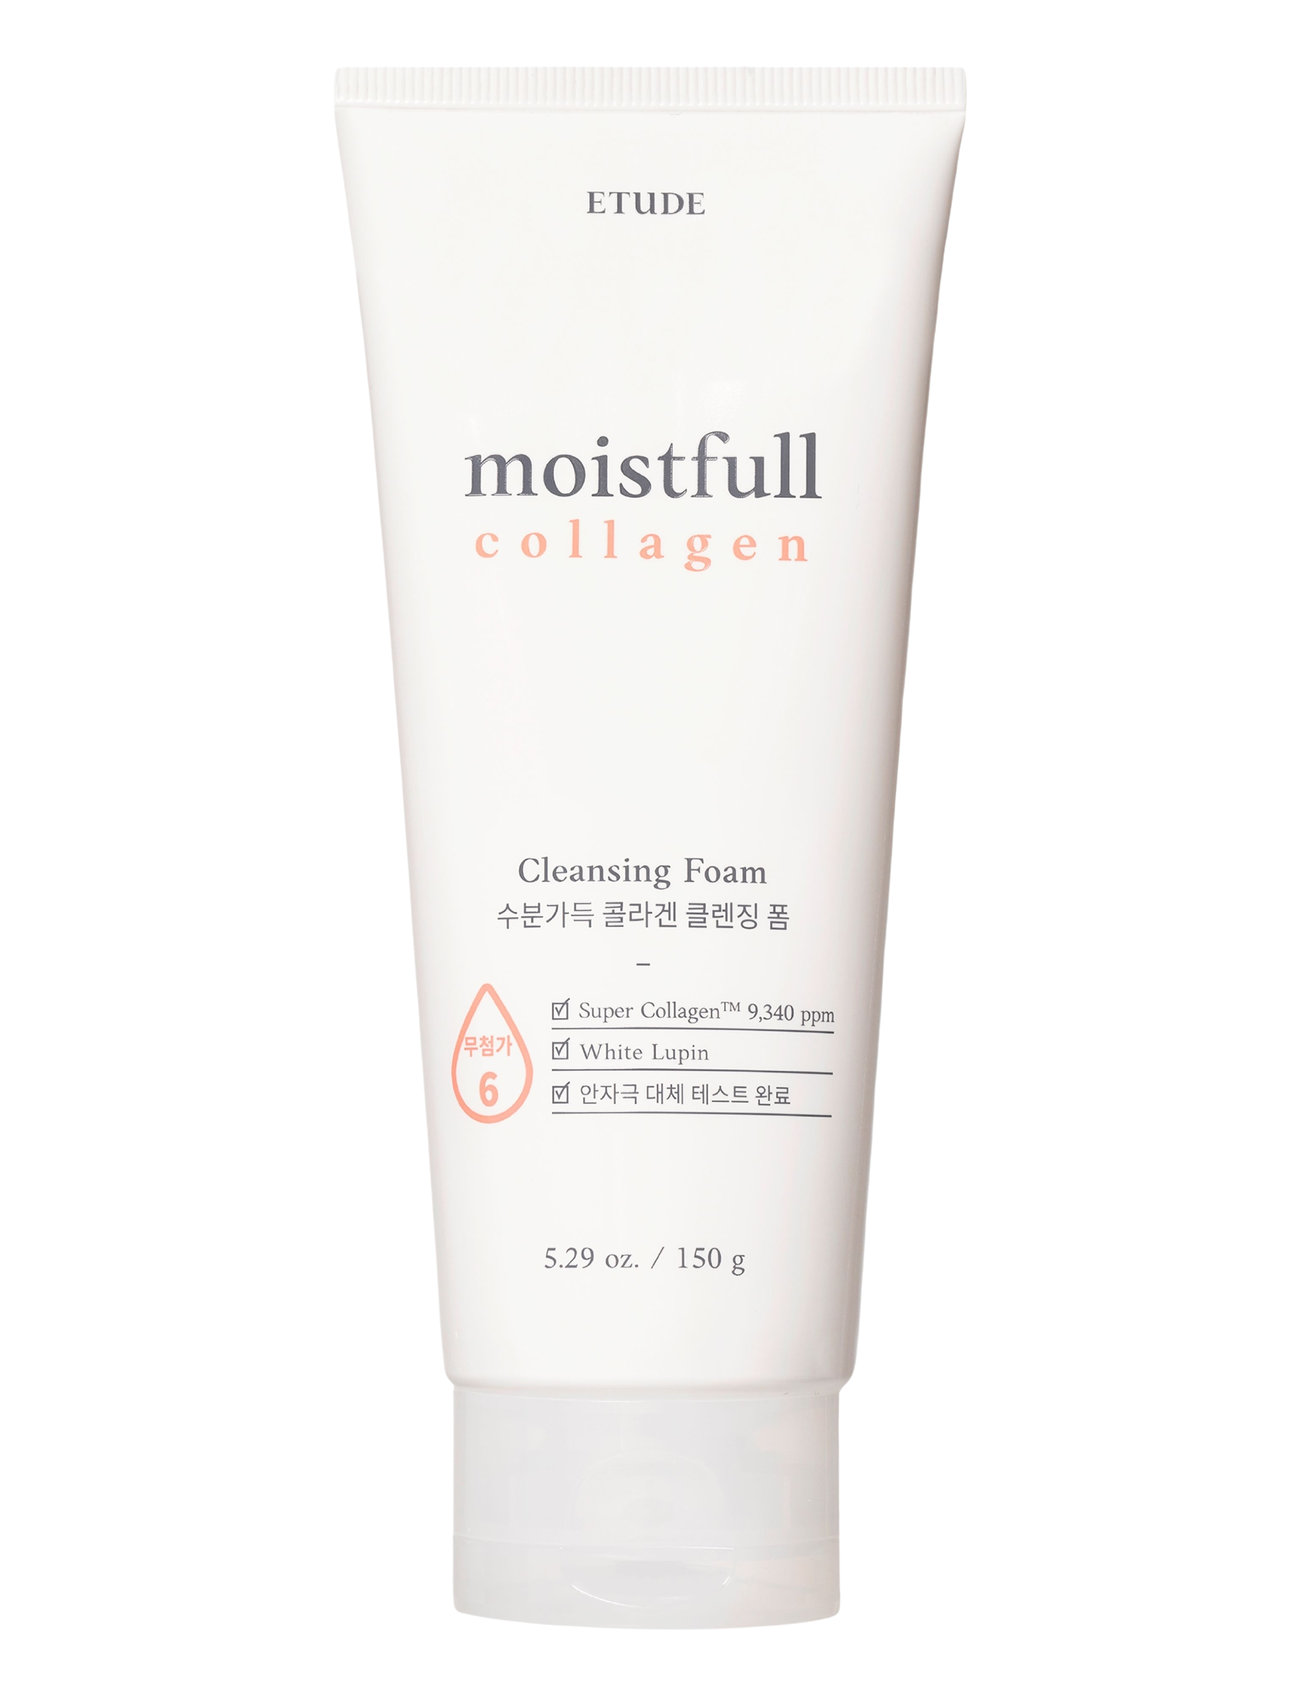 Moistfull Collagen Cleansing Foam Beauty Women Skin Care Face Cleansers Mousse Cleanser Nude ETUDE